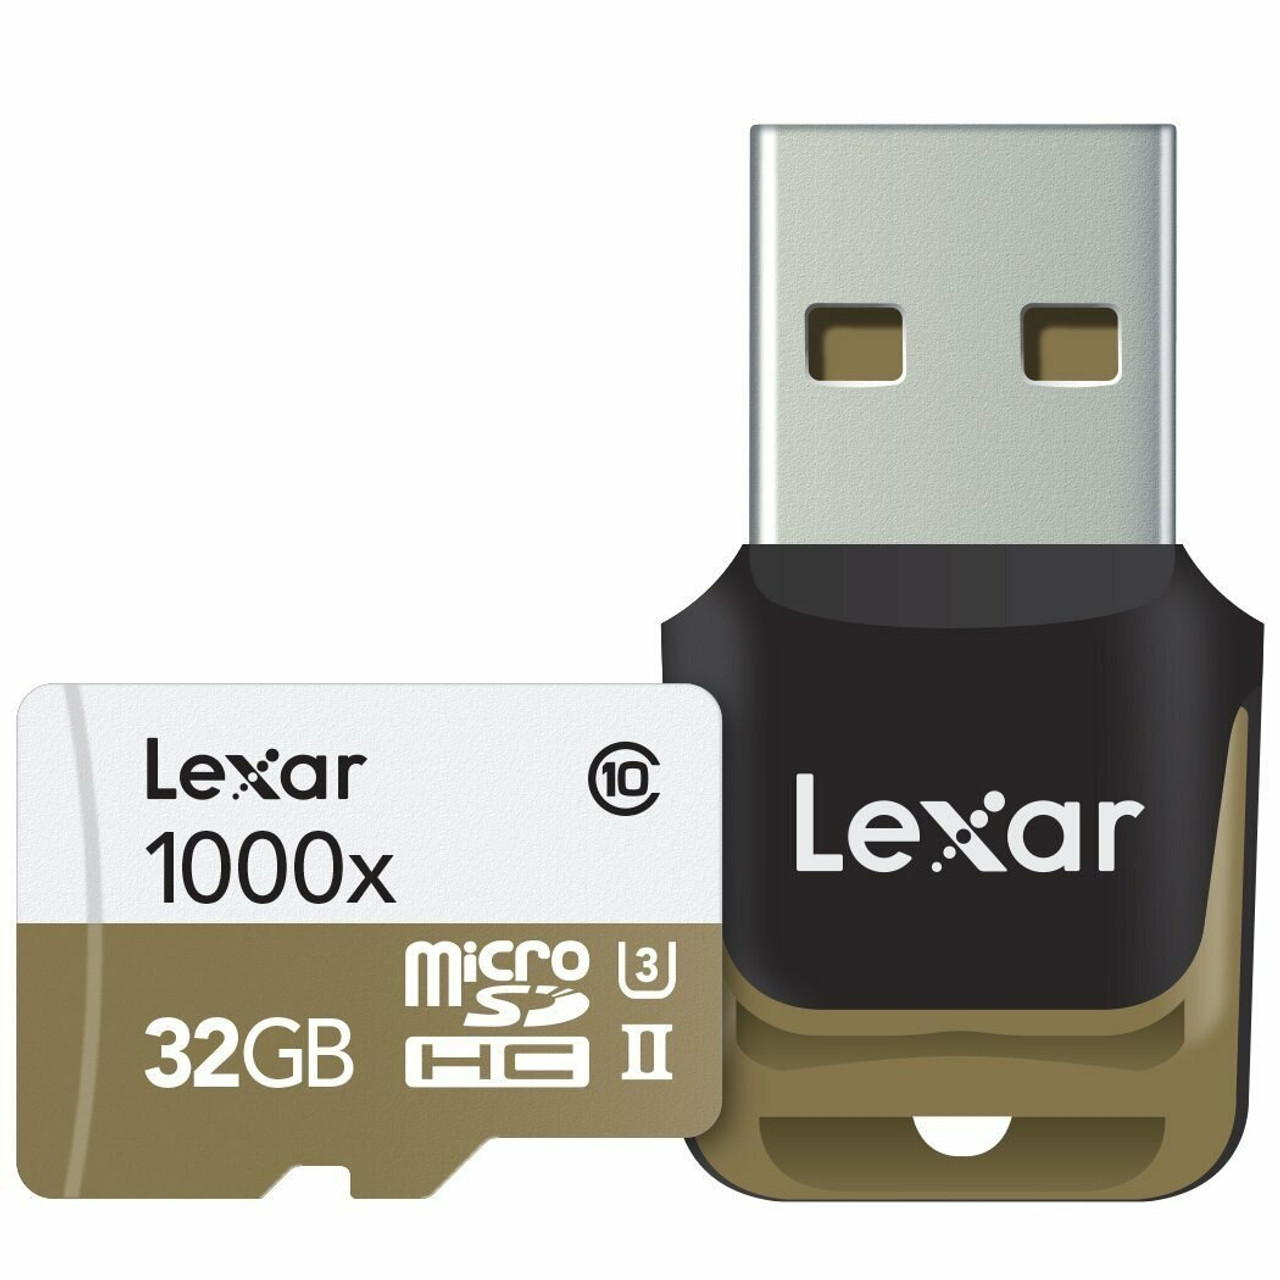 Lexar PLAY 256GB microSDXC UHS-I Memory Card, Up to 150MB/s Read 4